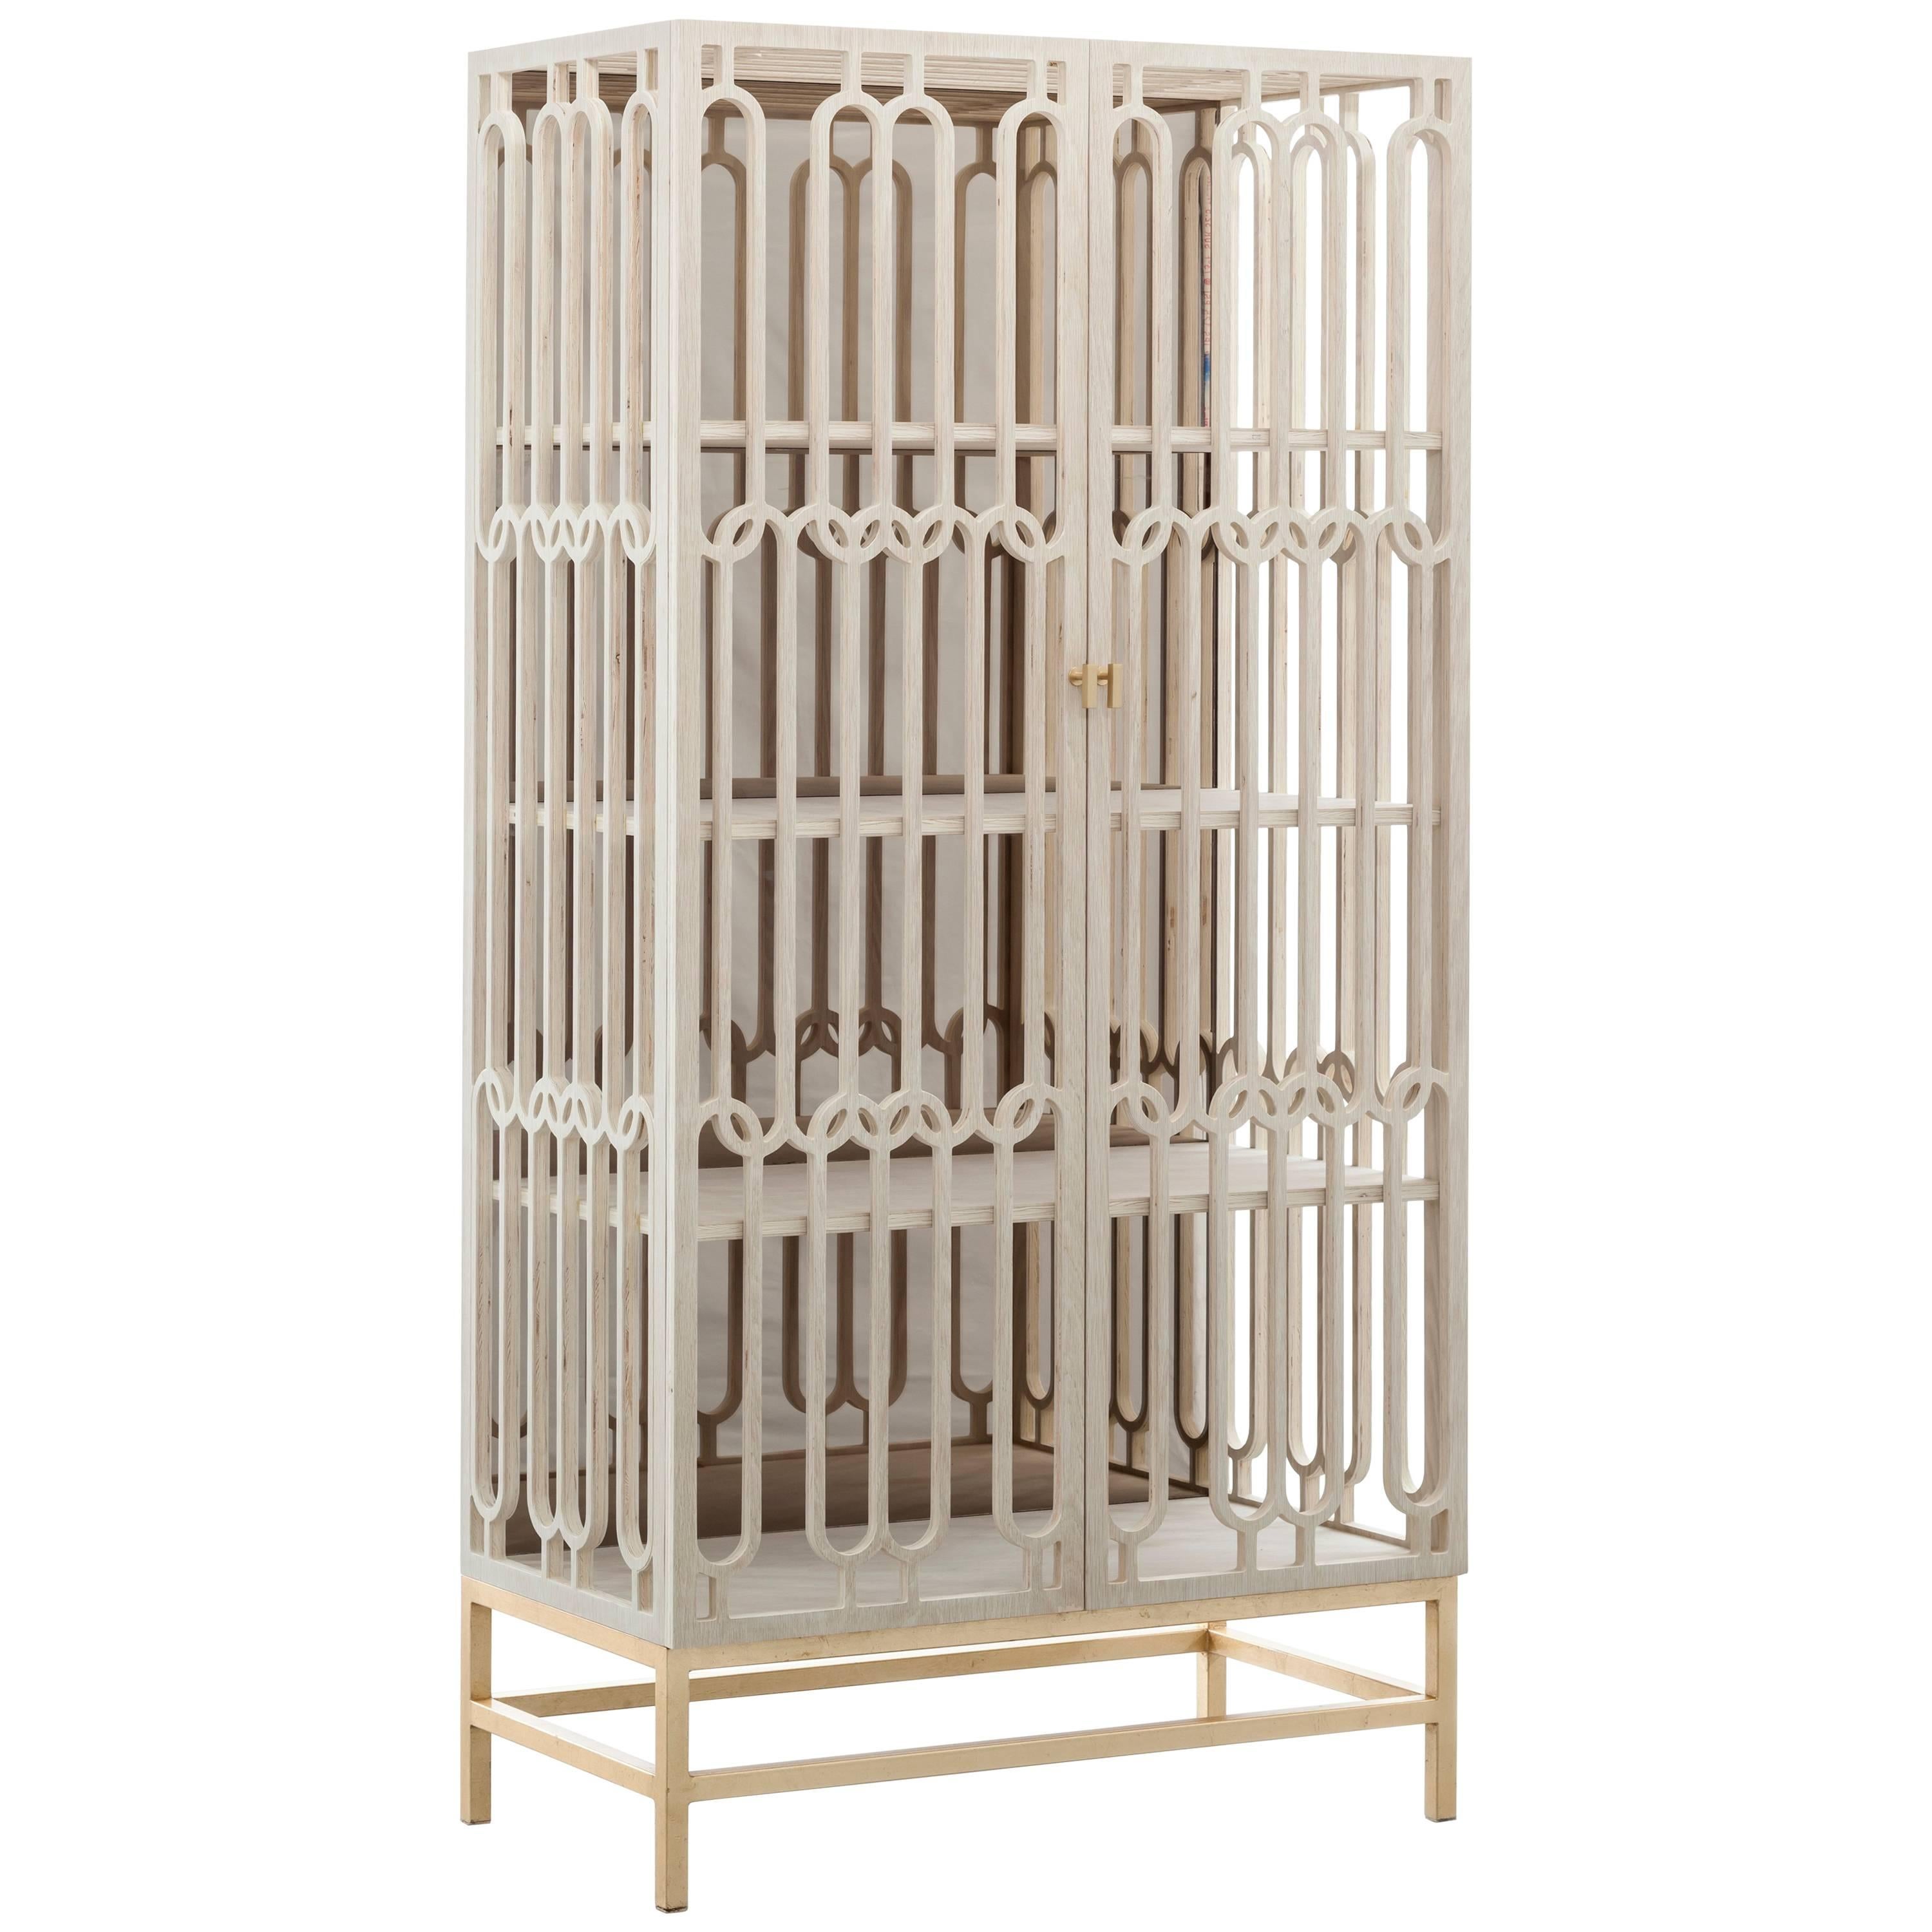 CHLOE CABINET - Modern Cabinet in Bleached Oak with Geometric Lattice Design